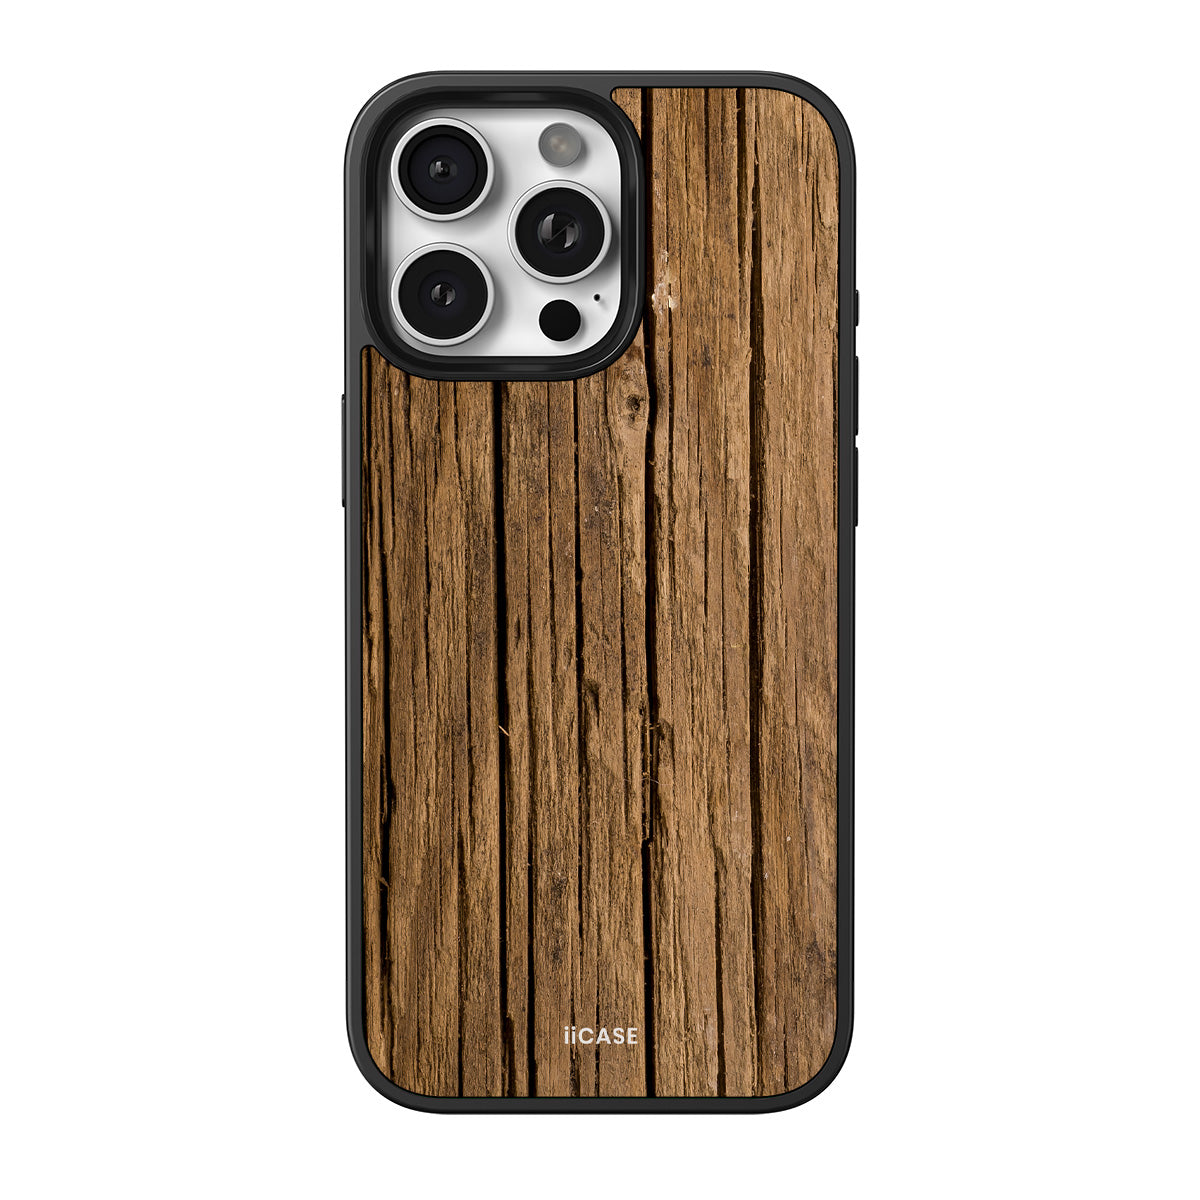 Rustic Timber iPhone Case